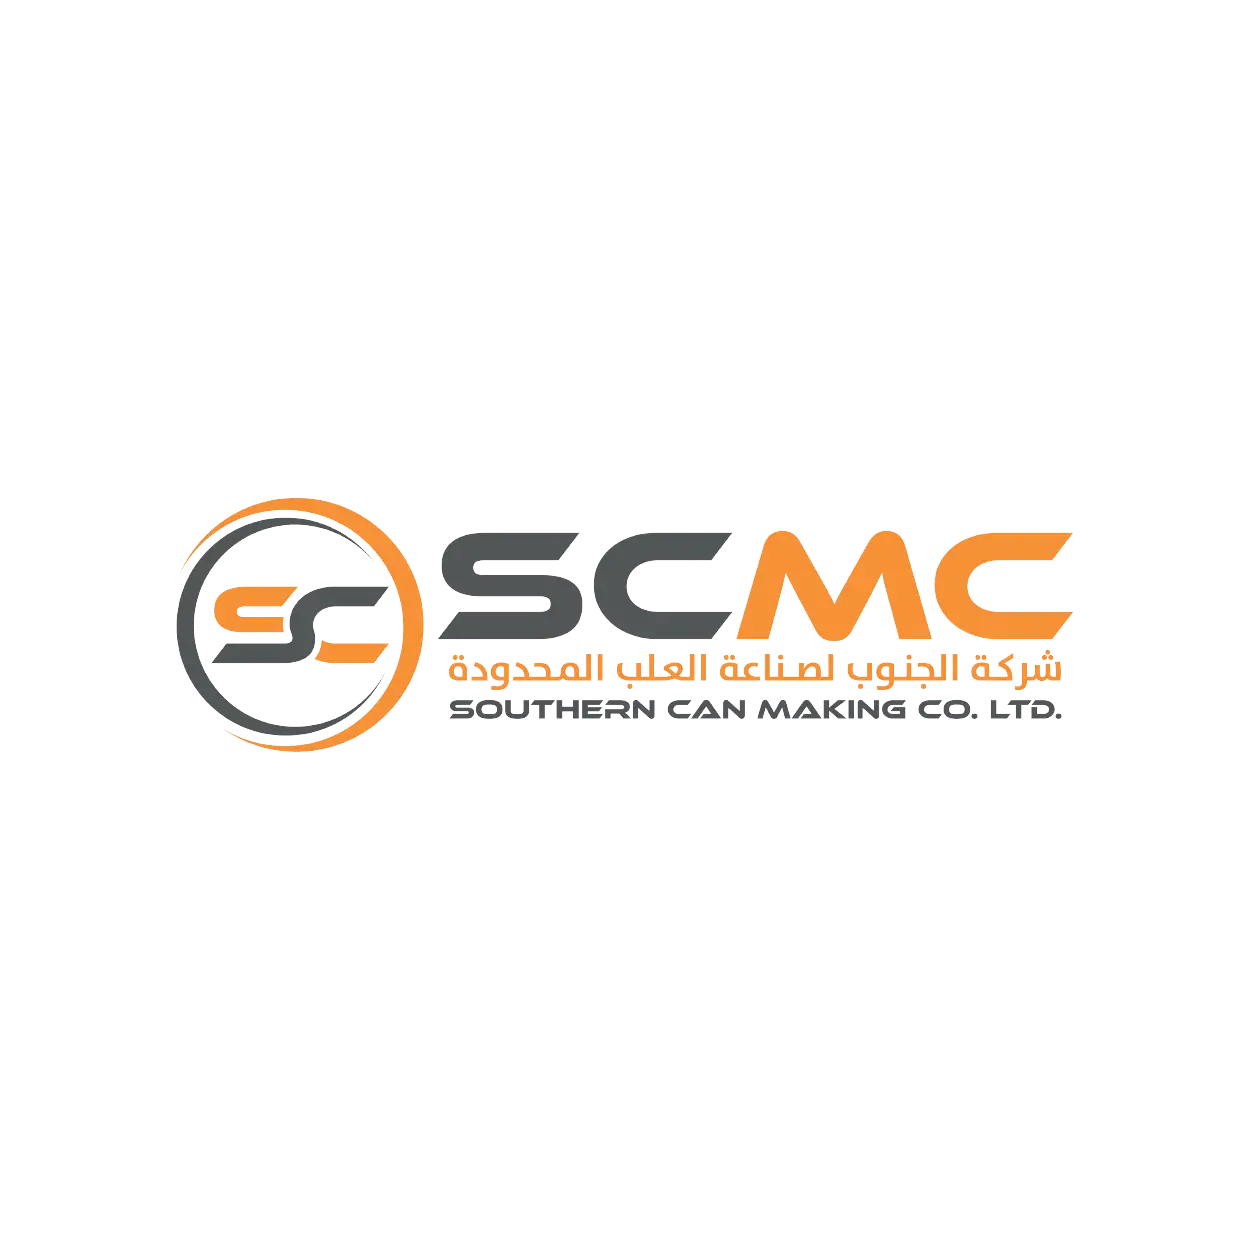 alesayi holding companies alesayi scmc logo